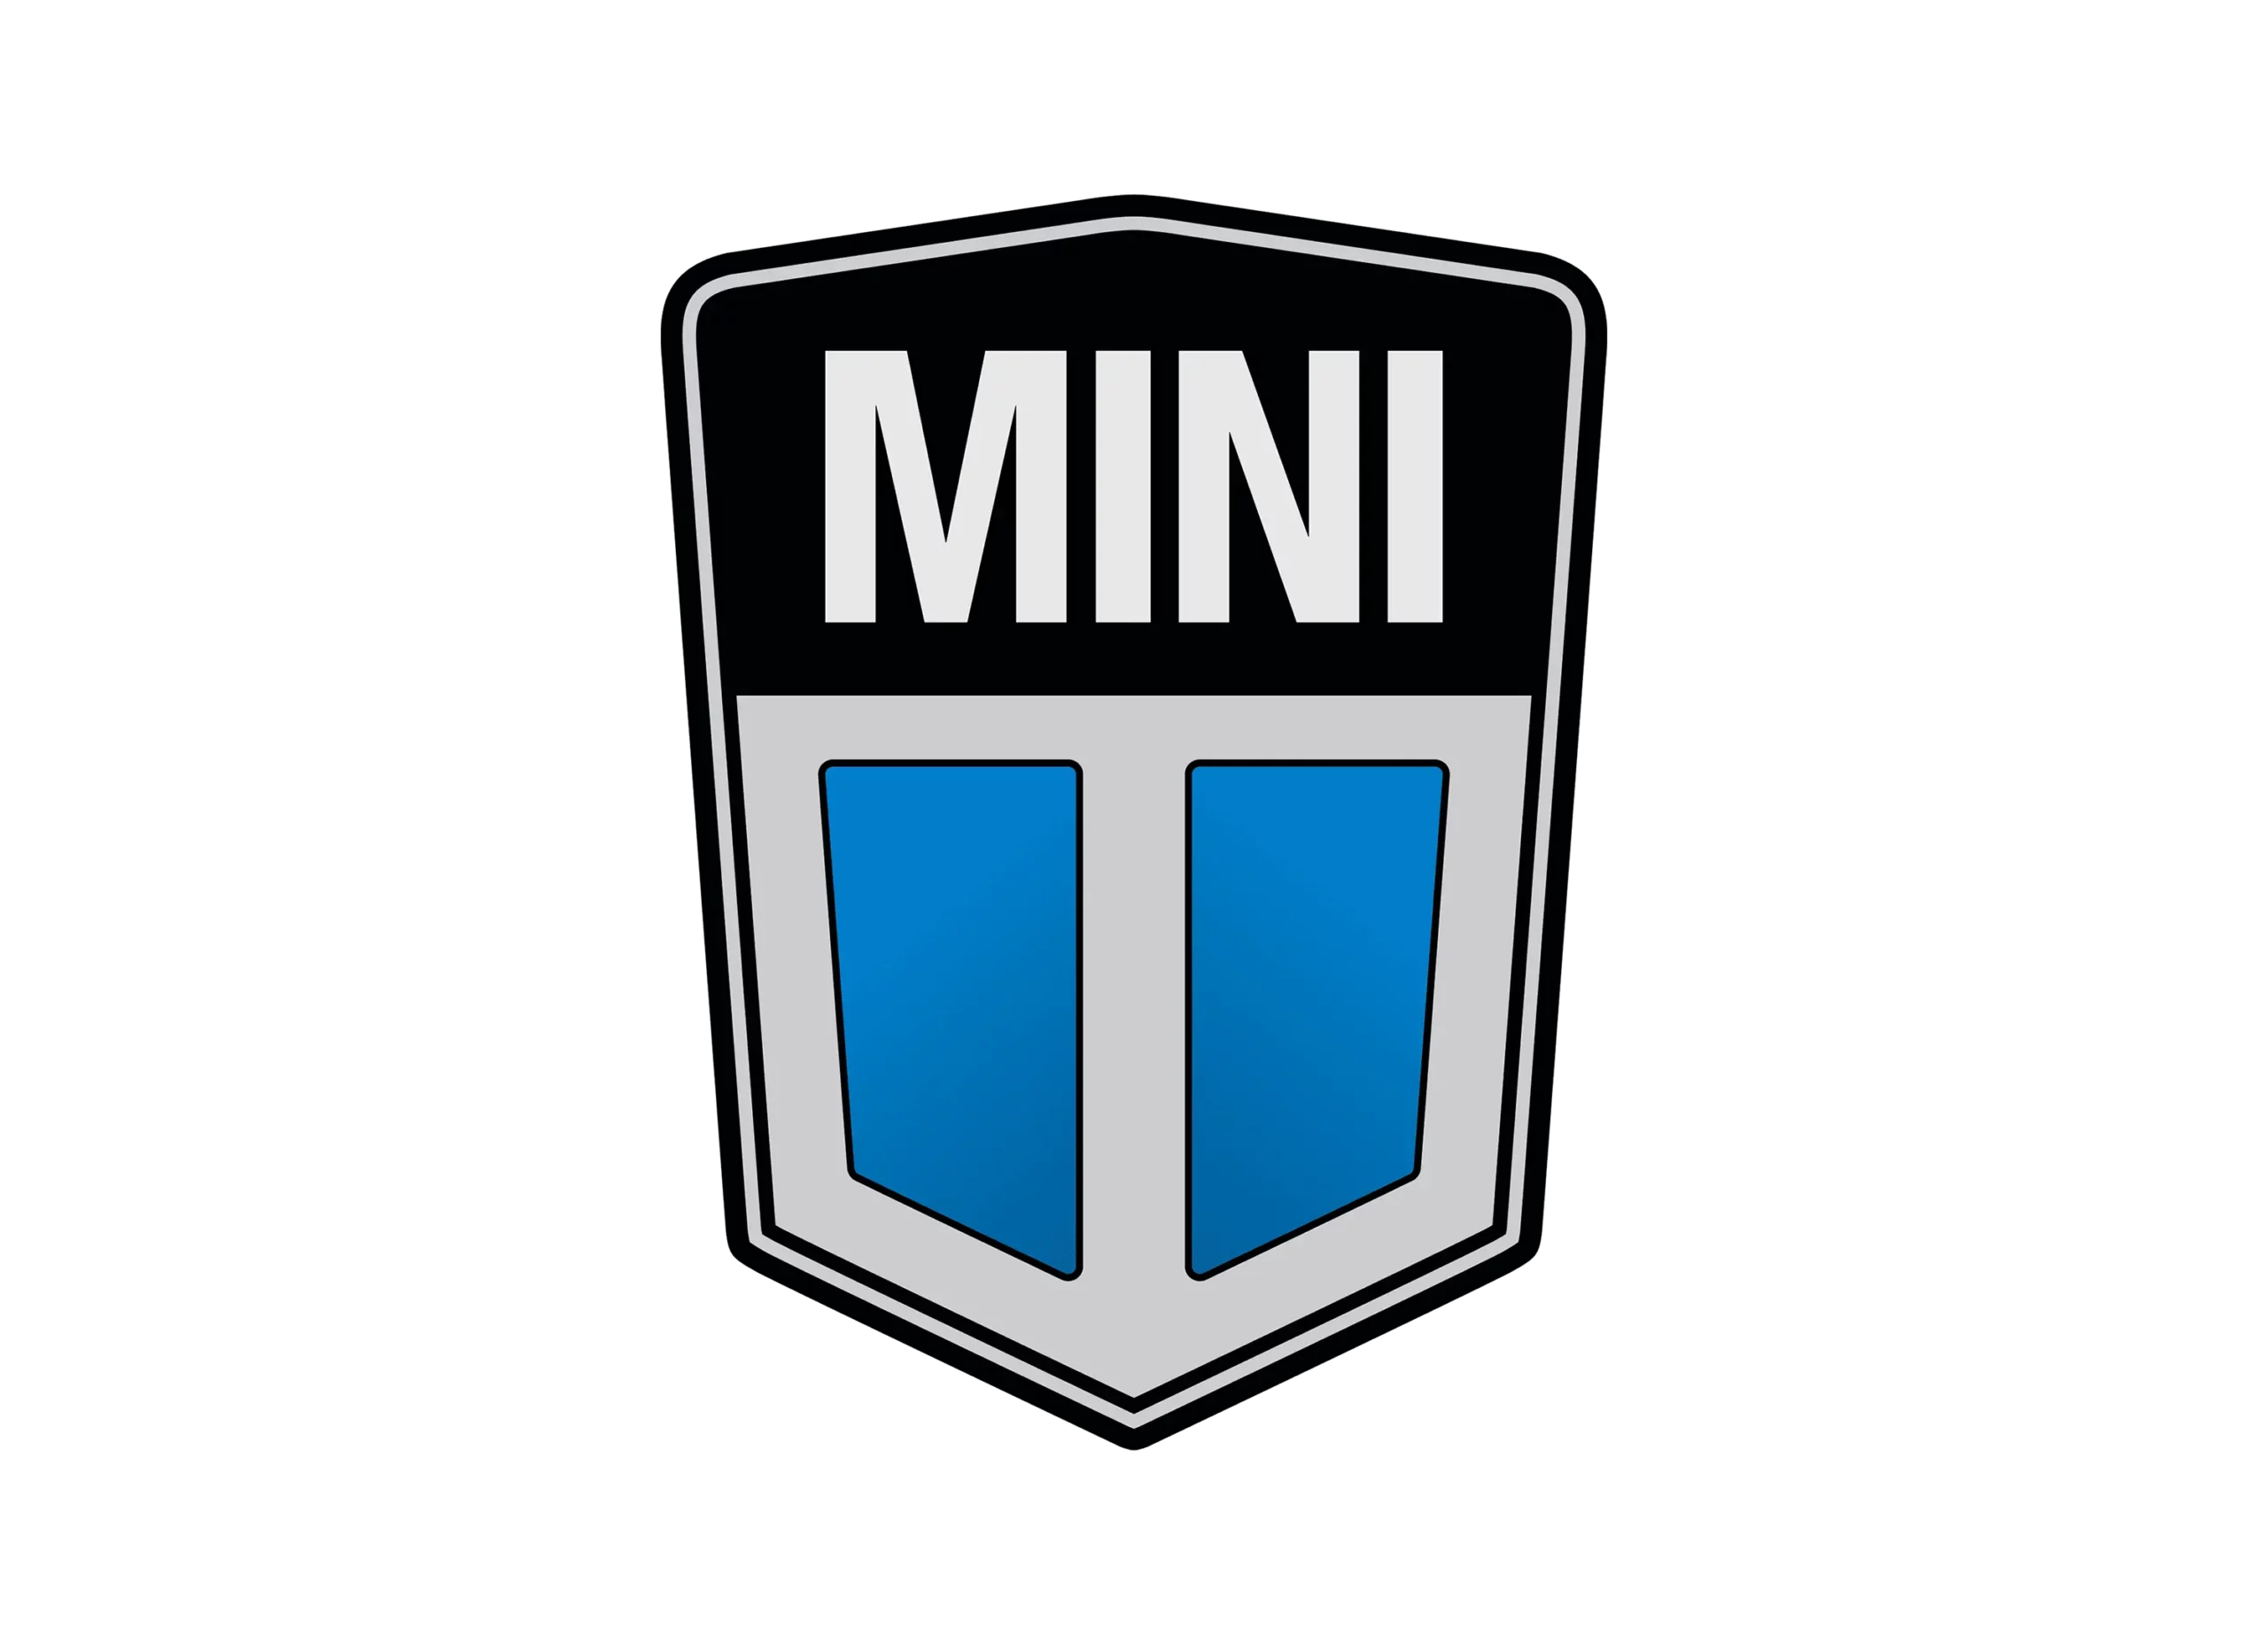 Mini logo 1969-2001